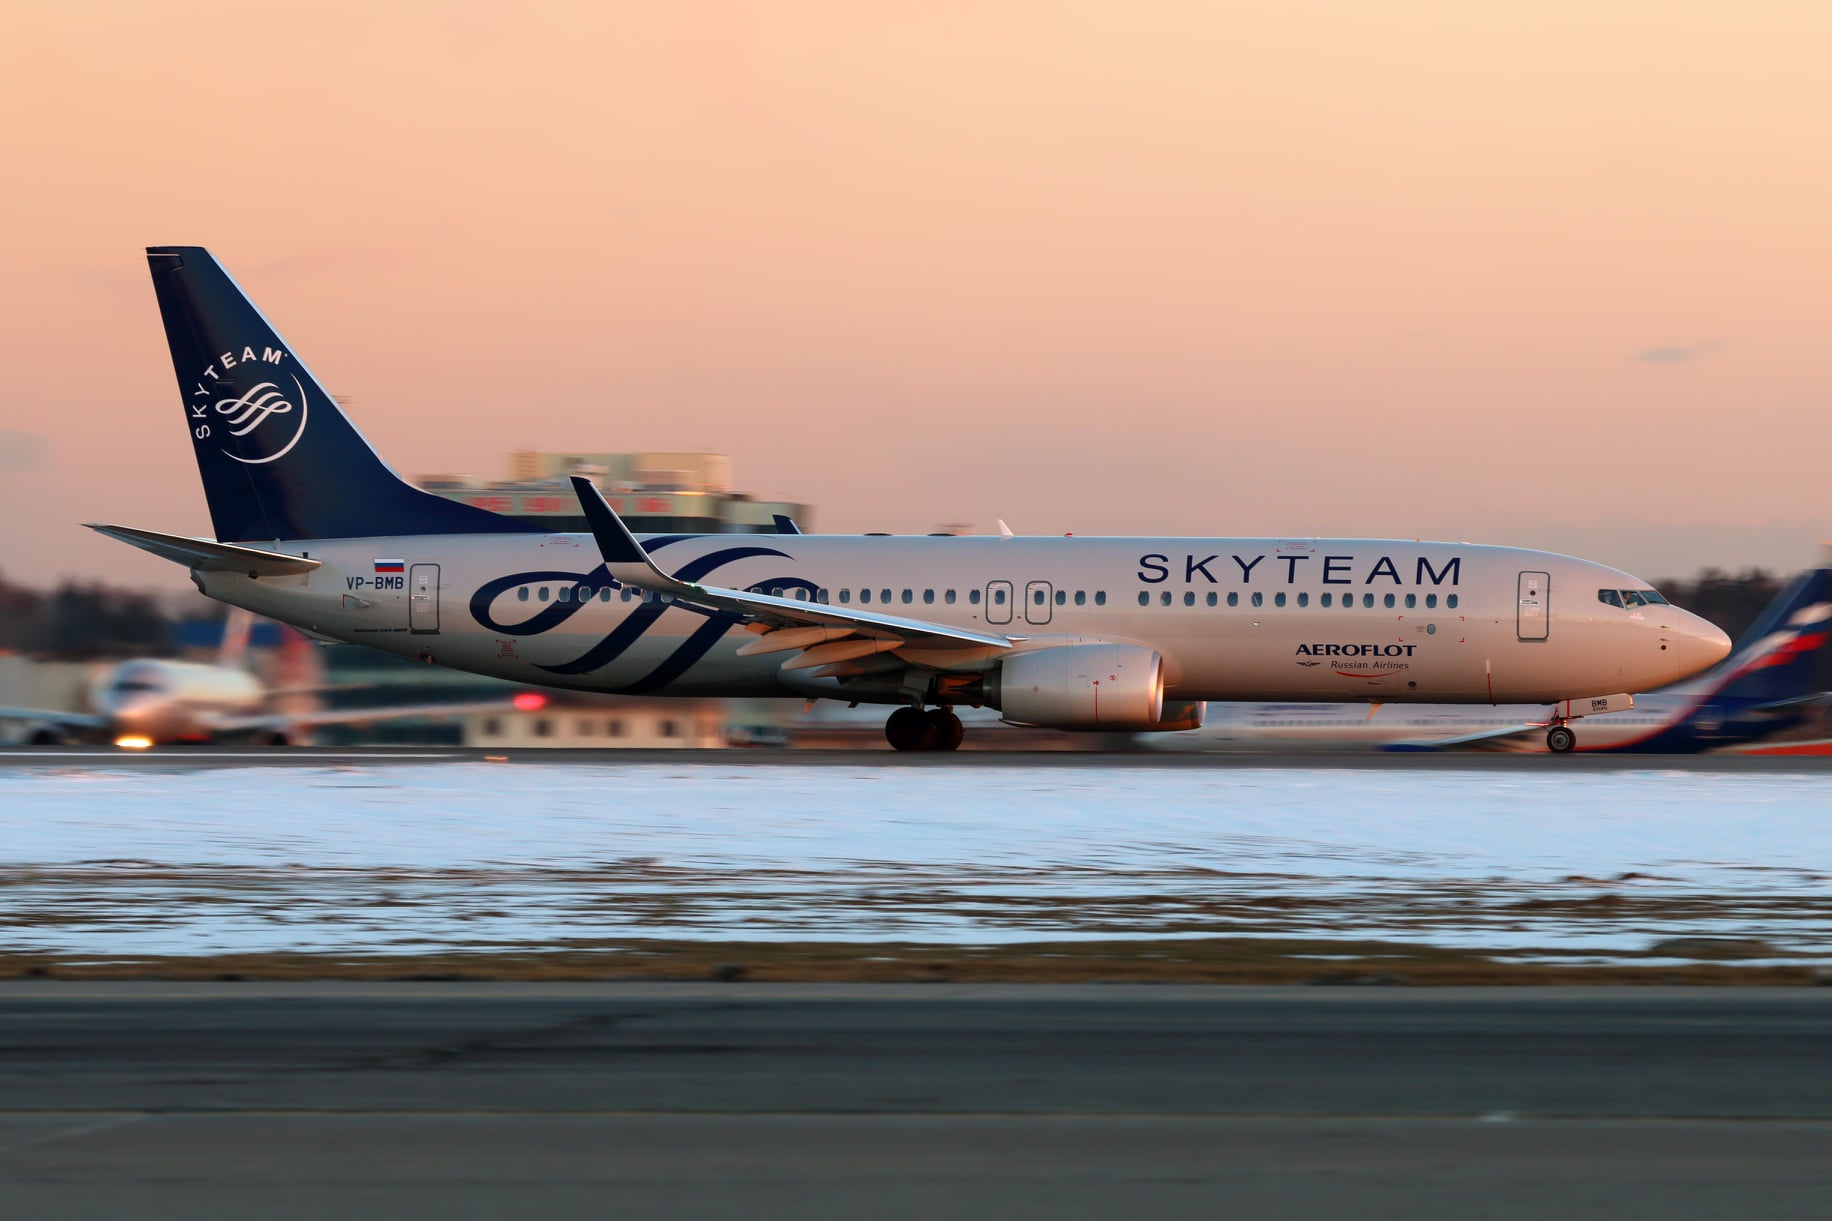 Aeroflot SkyTeam livery